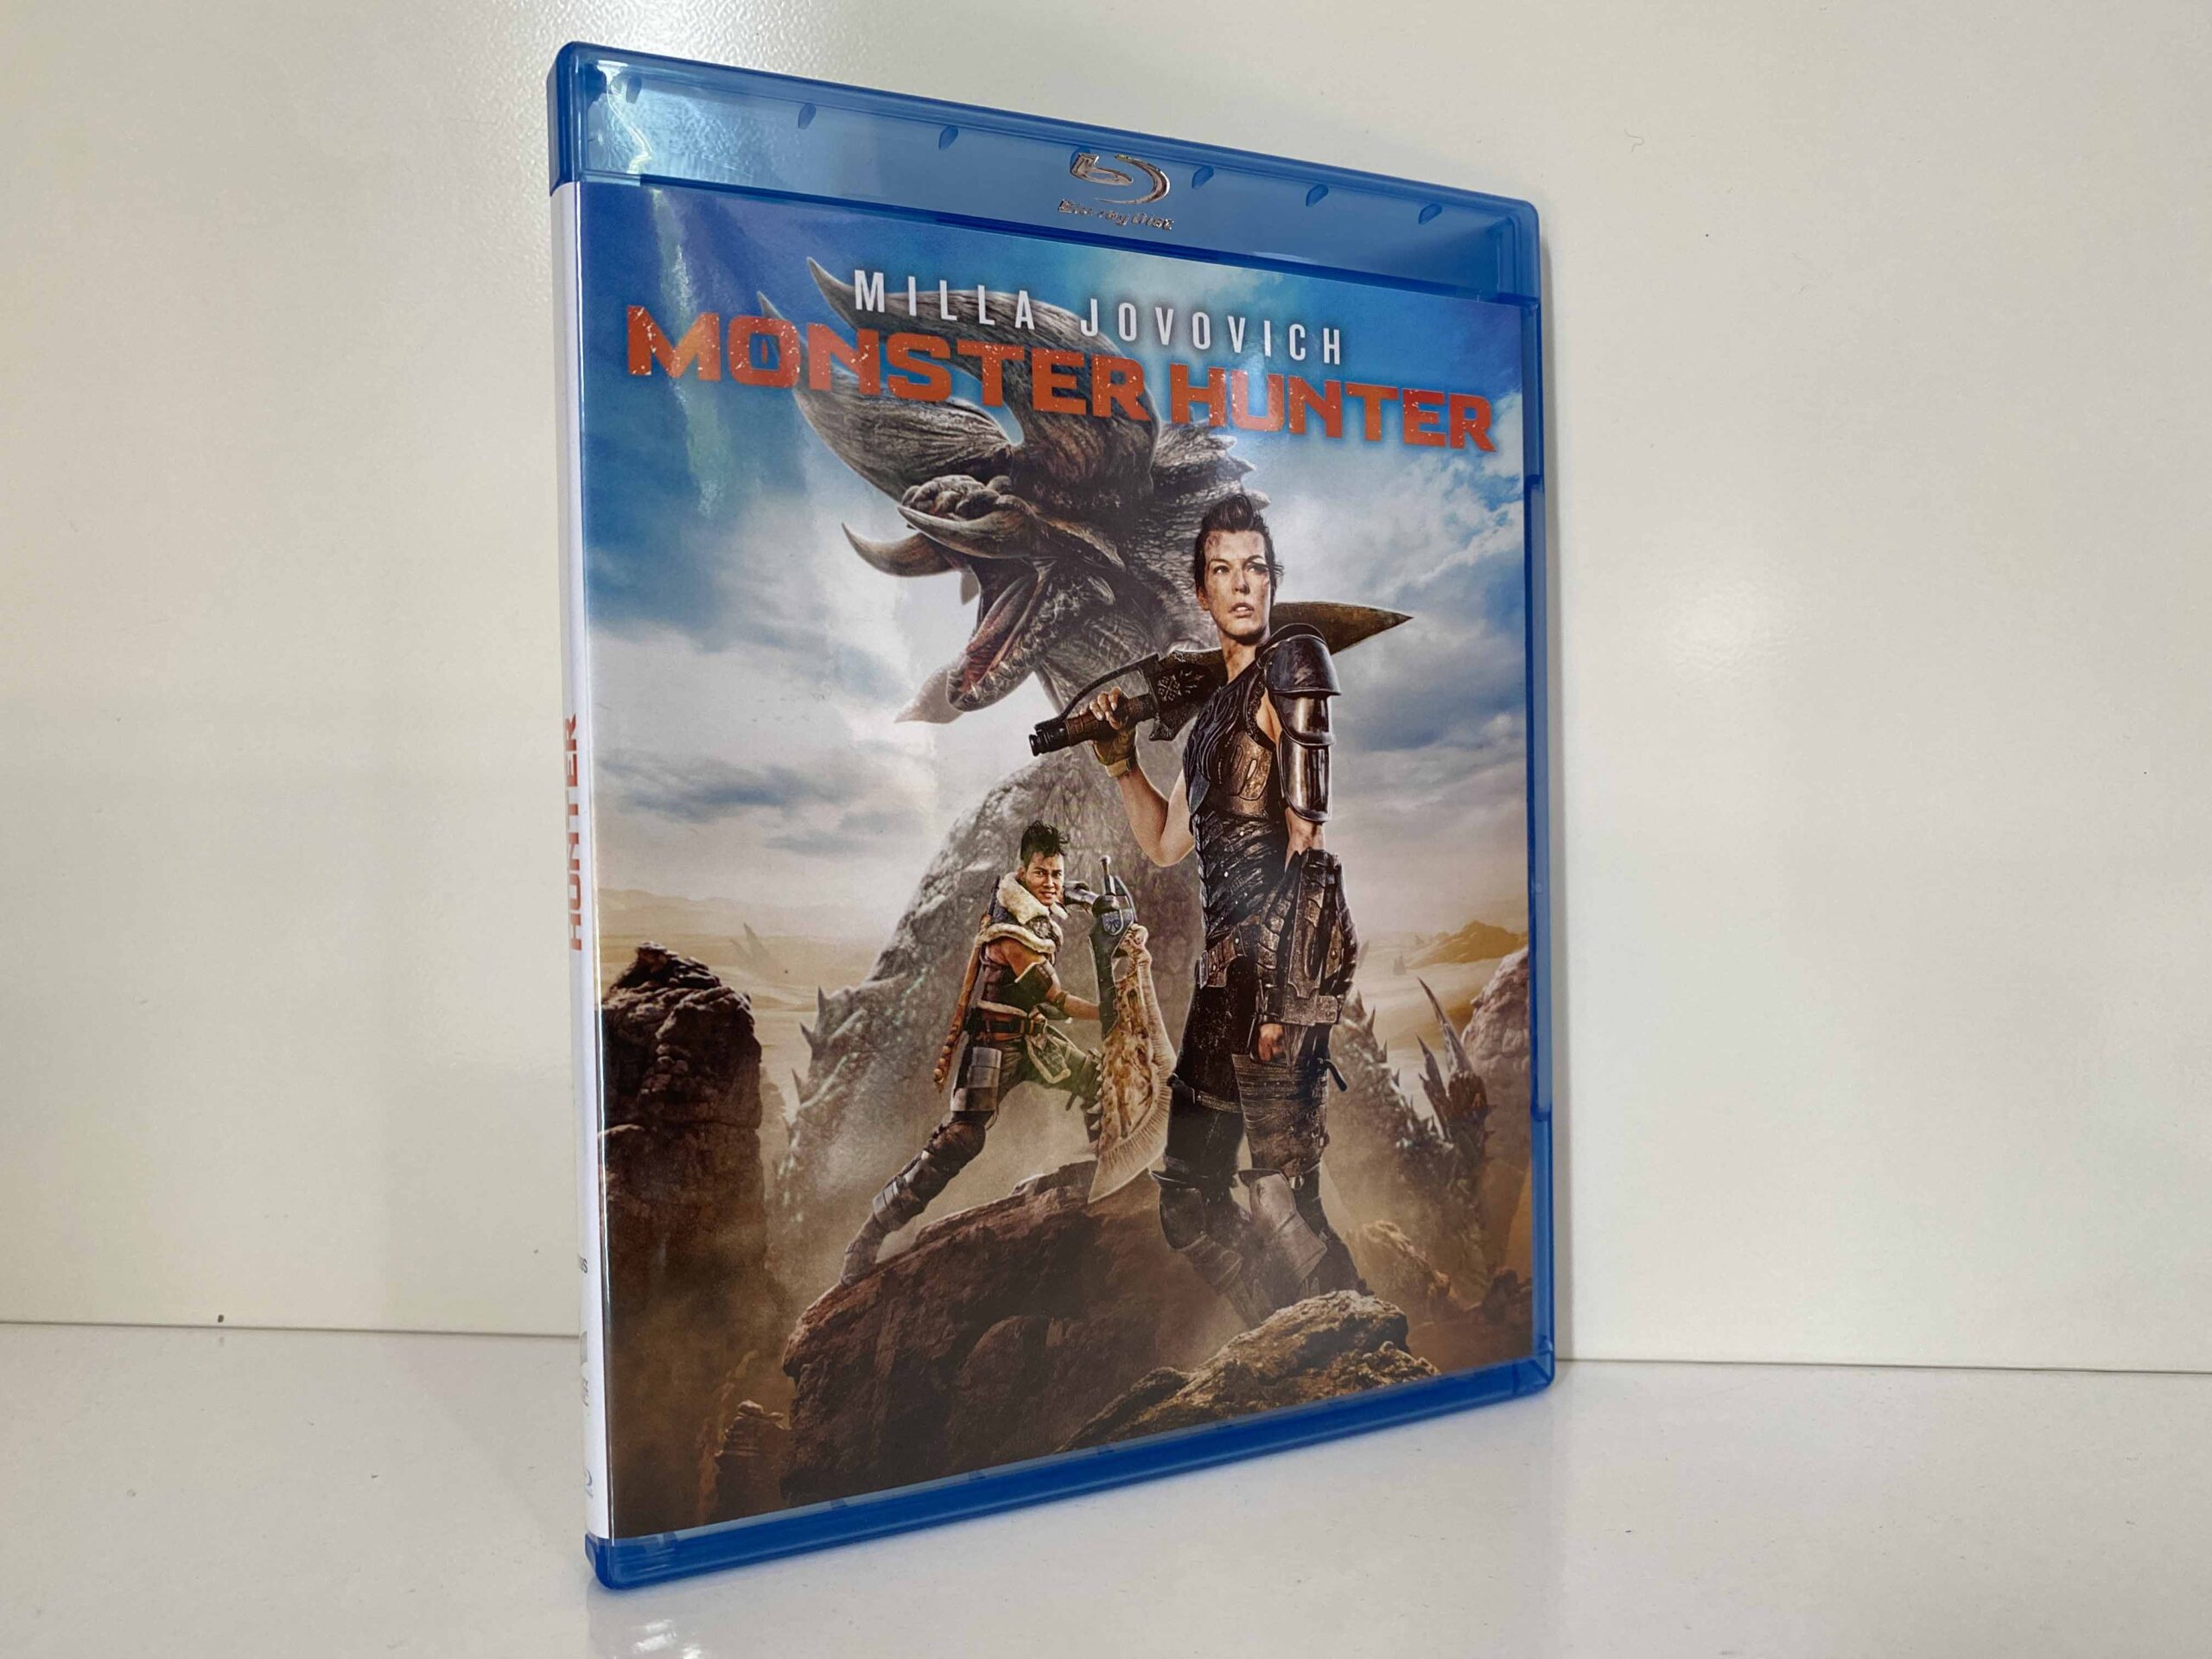 Análisis del Blu-ray de ‘Monster Hunter’